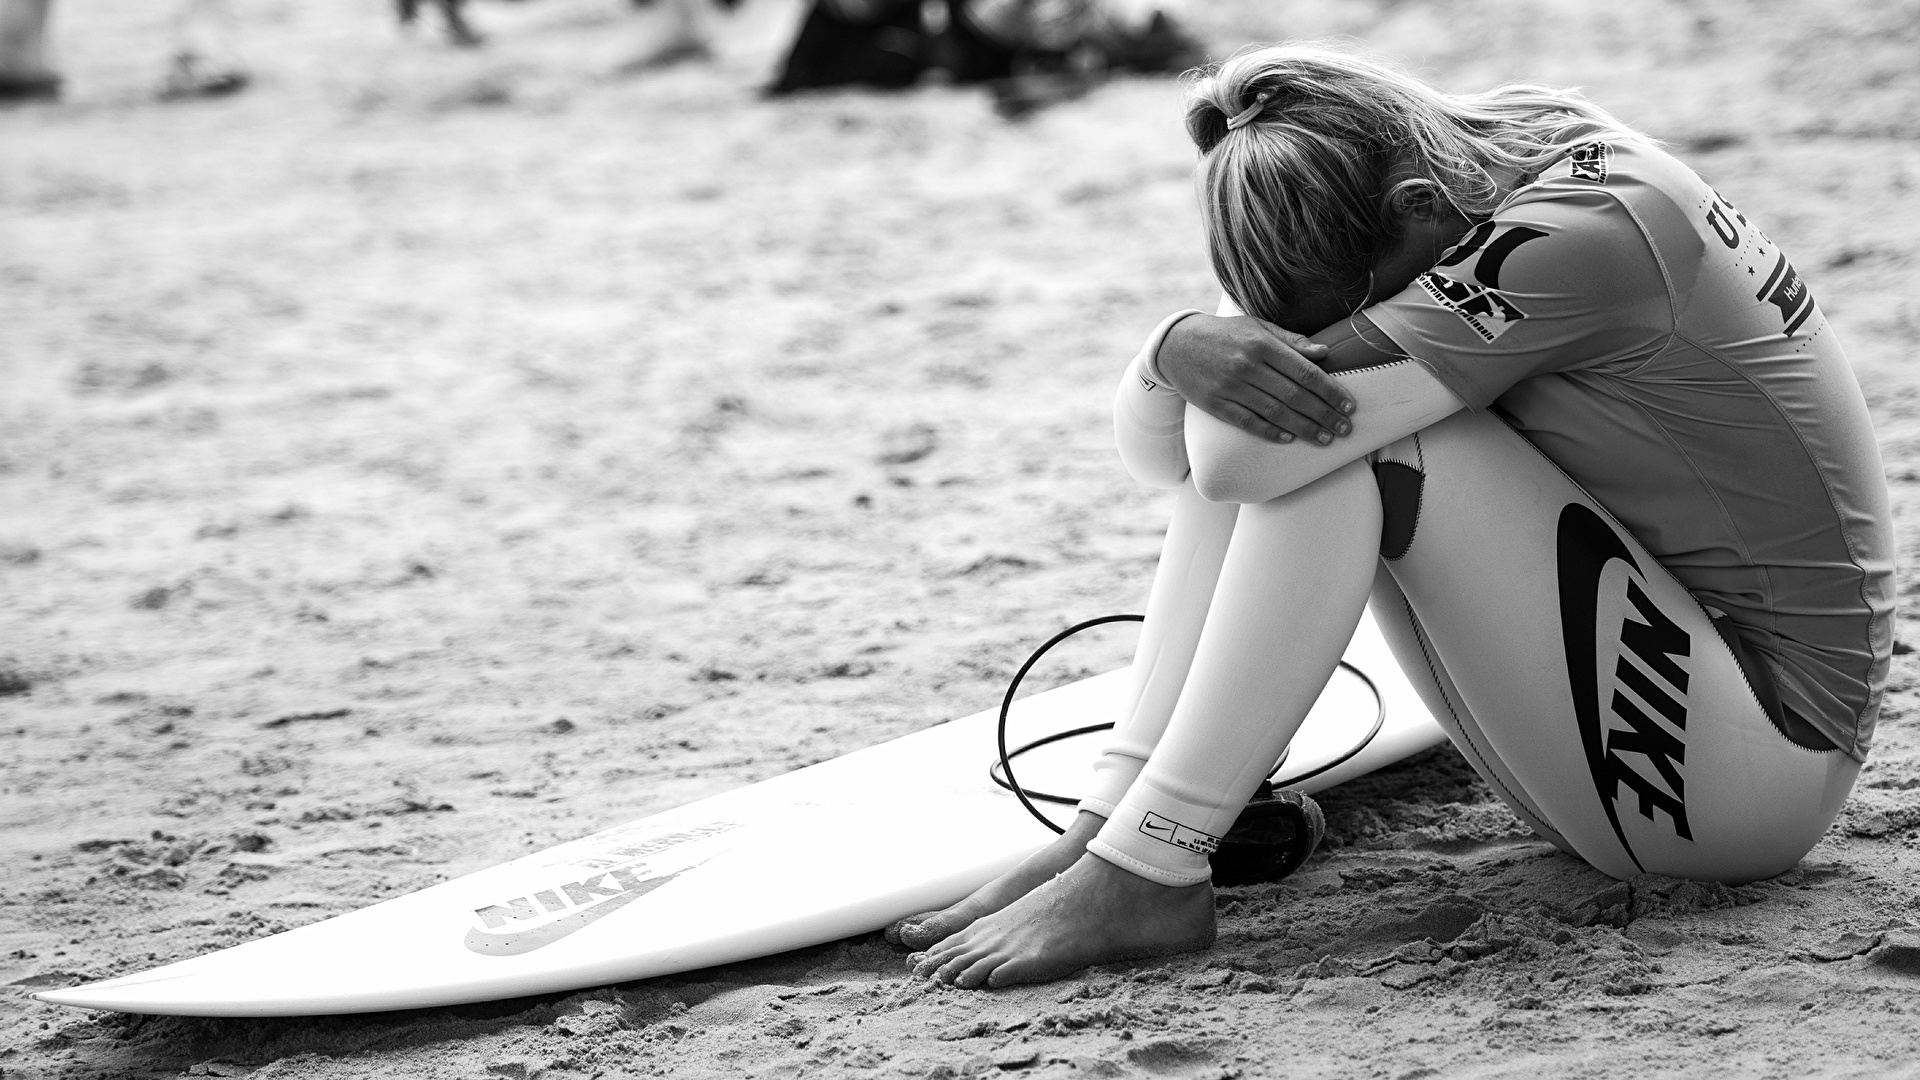 Images Nike Beaches Girls Sport Surfing Brand Sitting 1920x1080 